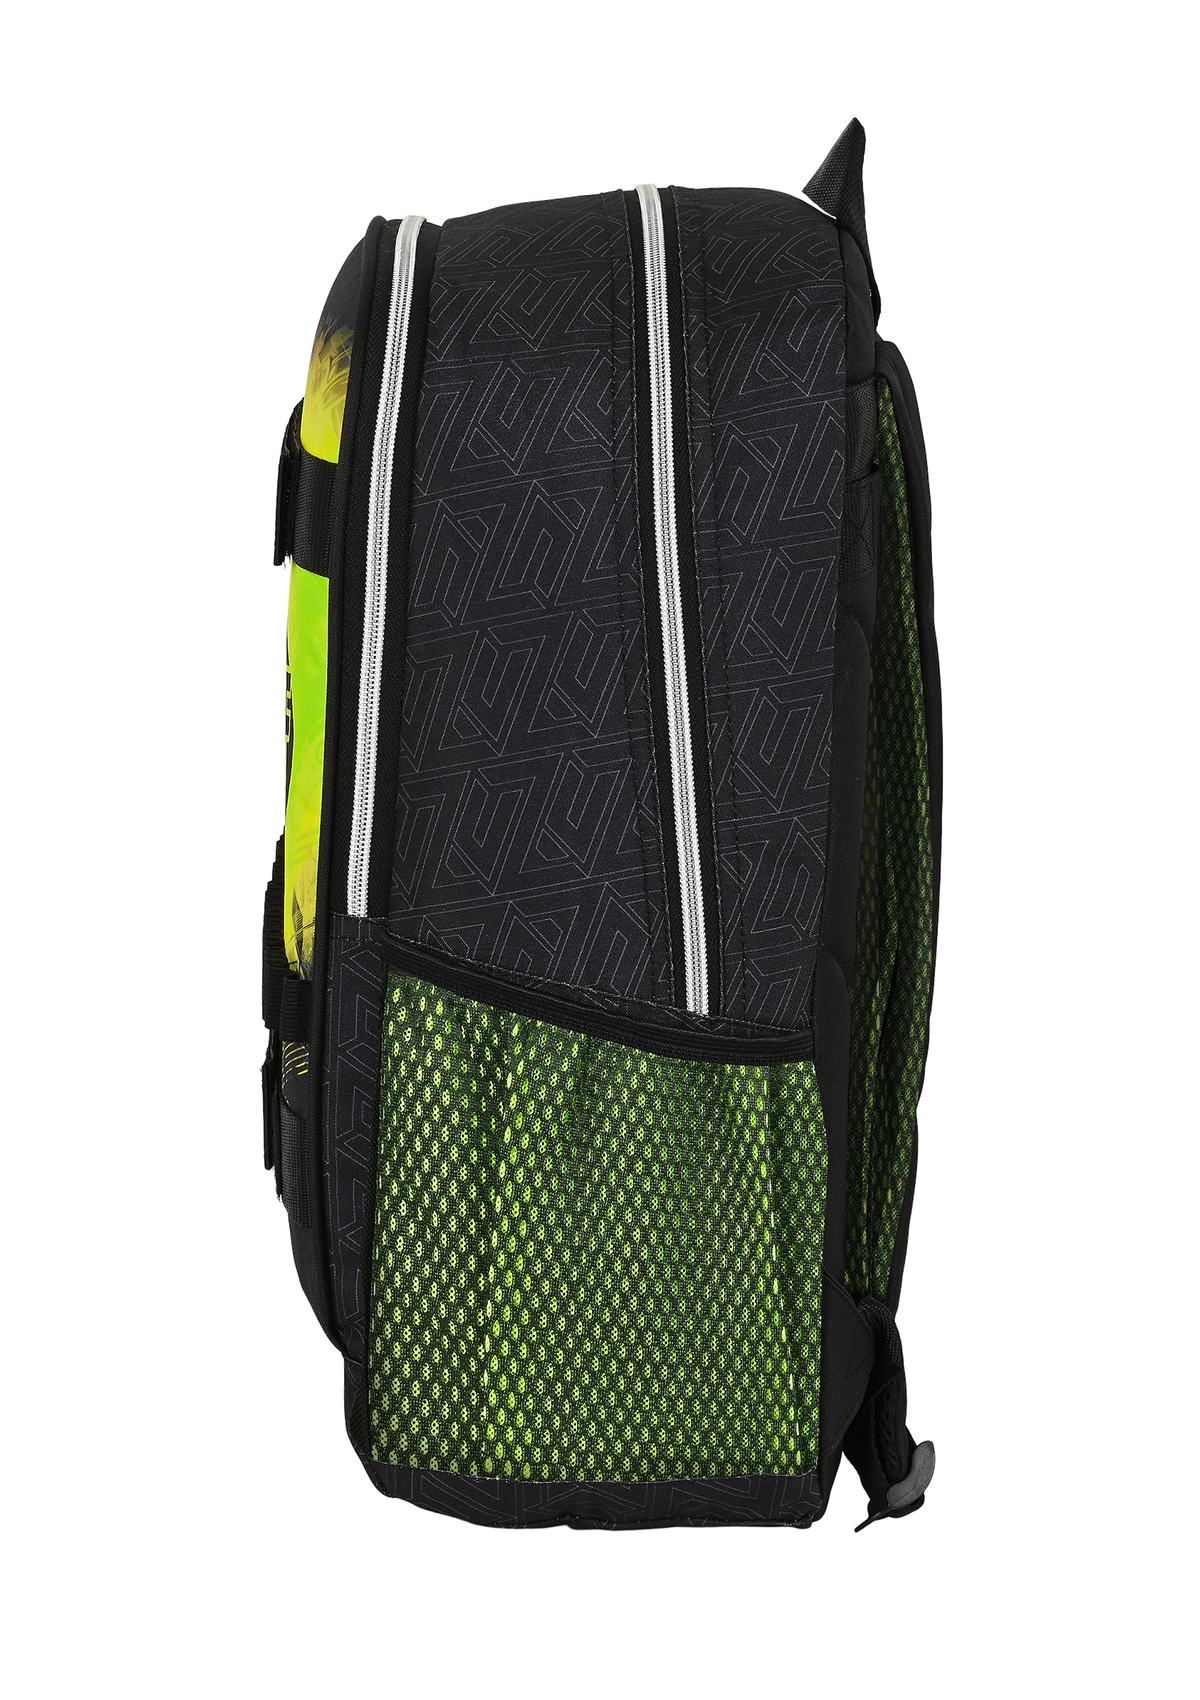 Nerf Large Backpack